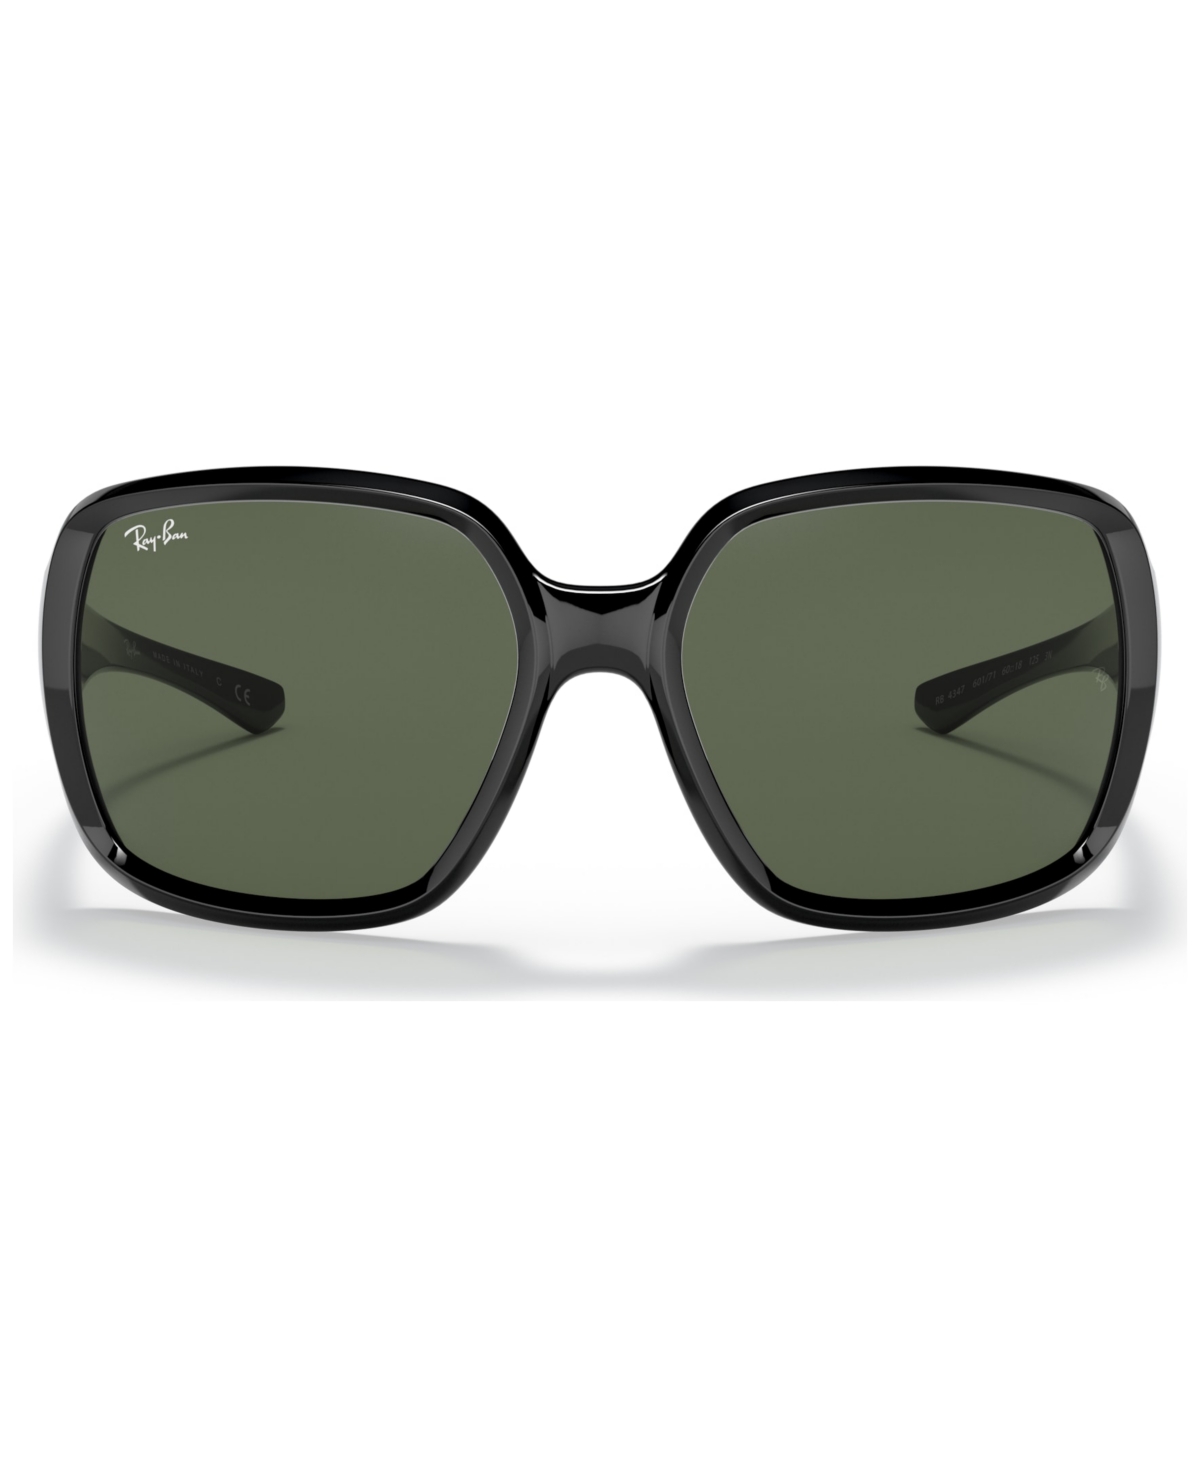 Ray Ban Powderhorn Sunglasses Black Frame Green Lenses 60-18